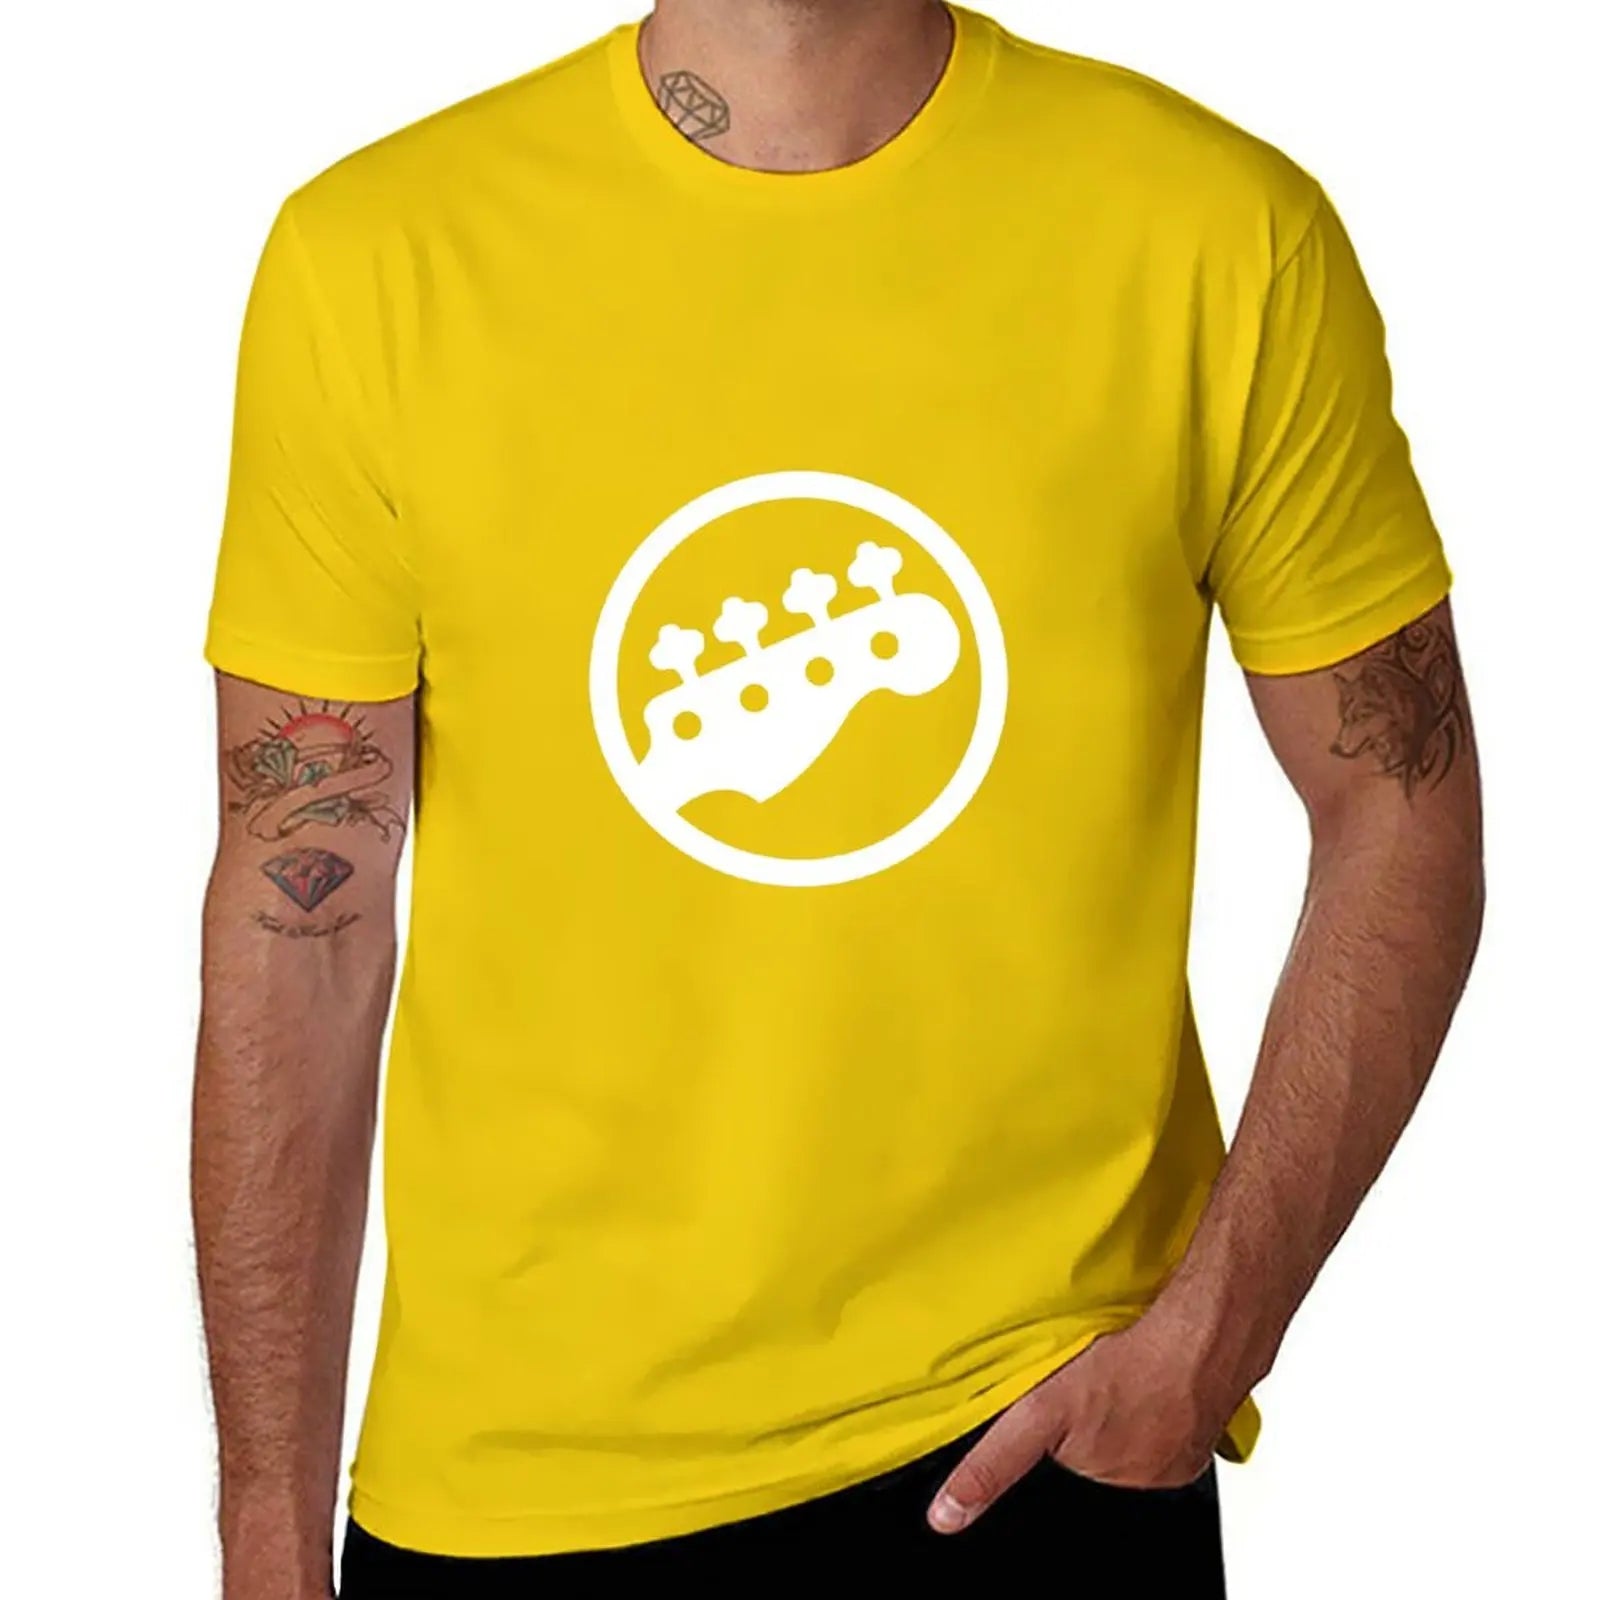 Bass Guitar T-Shirt Bassist Clothing Summer Tops animal print shirt for boys funny t shirts for men - Premium tshirt from Lizard Vigilante - Just $21.99! Shop now at Lizard Vigilante